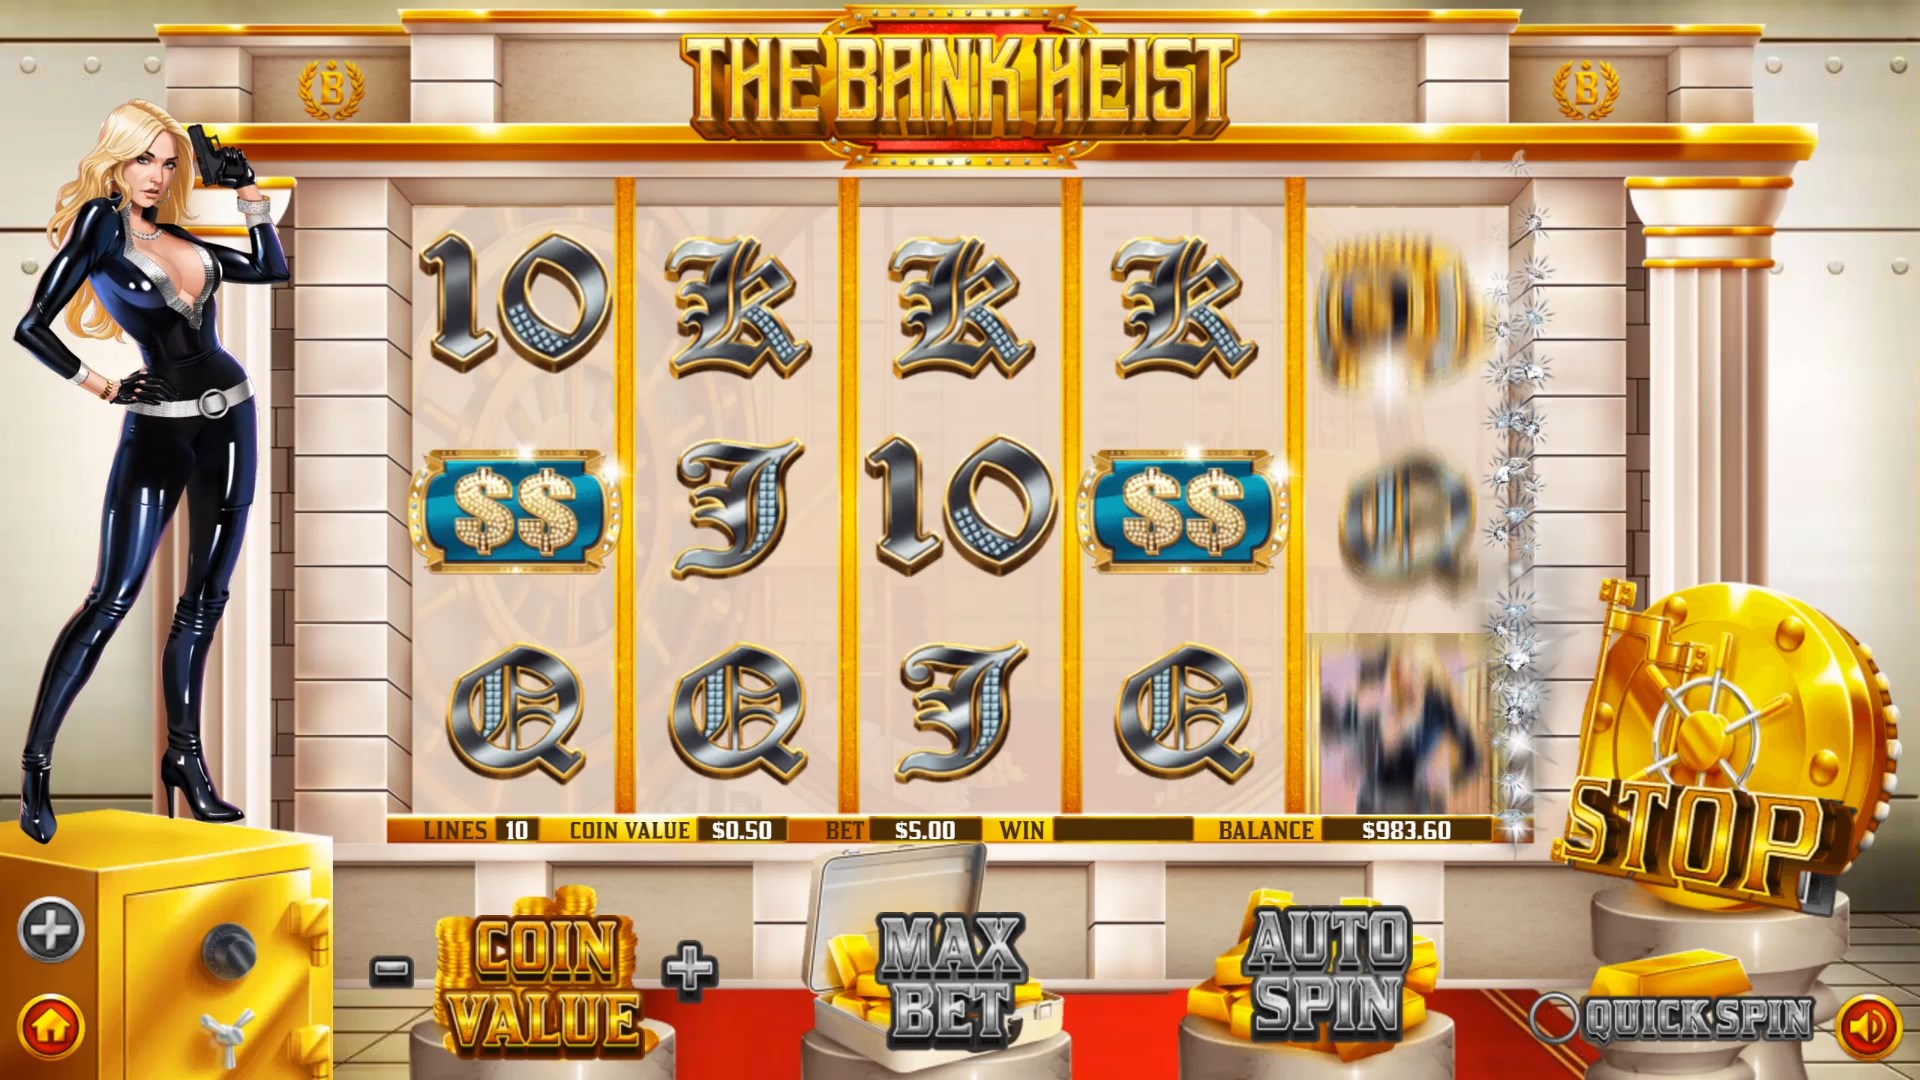 The bank heist screenshot